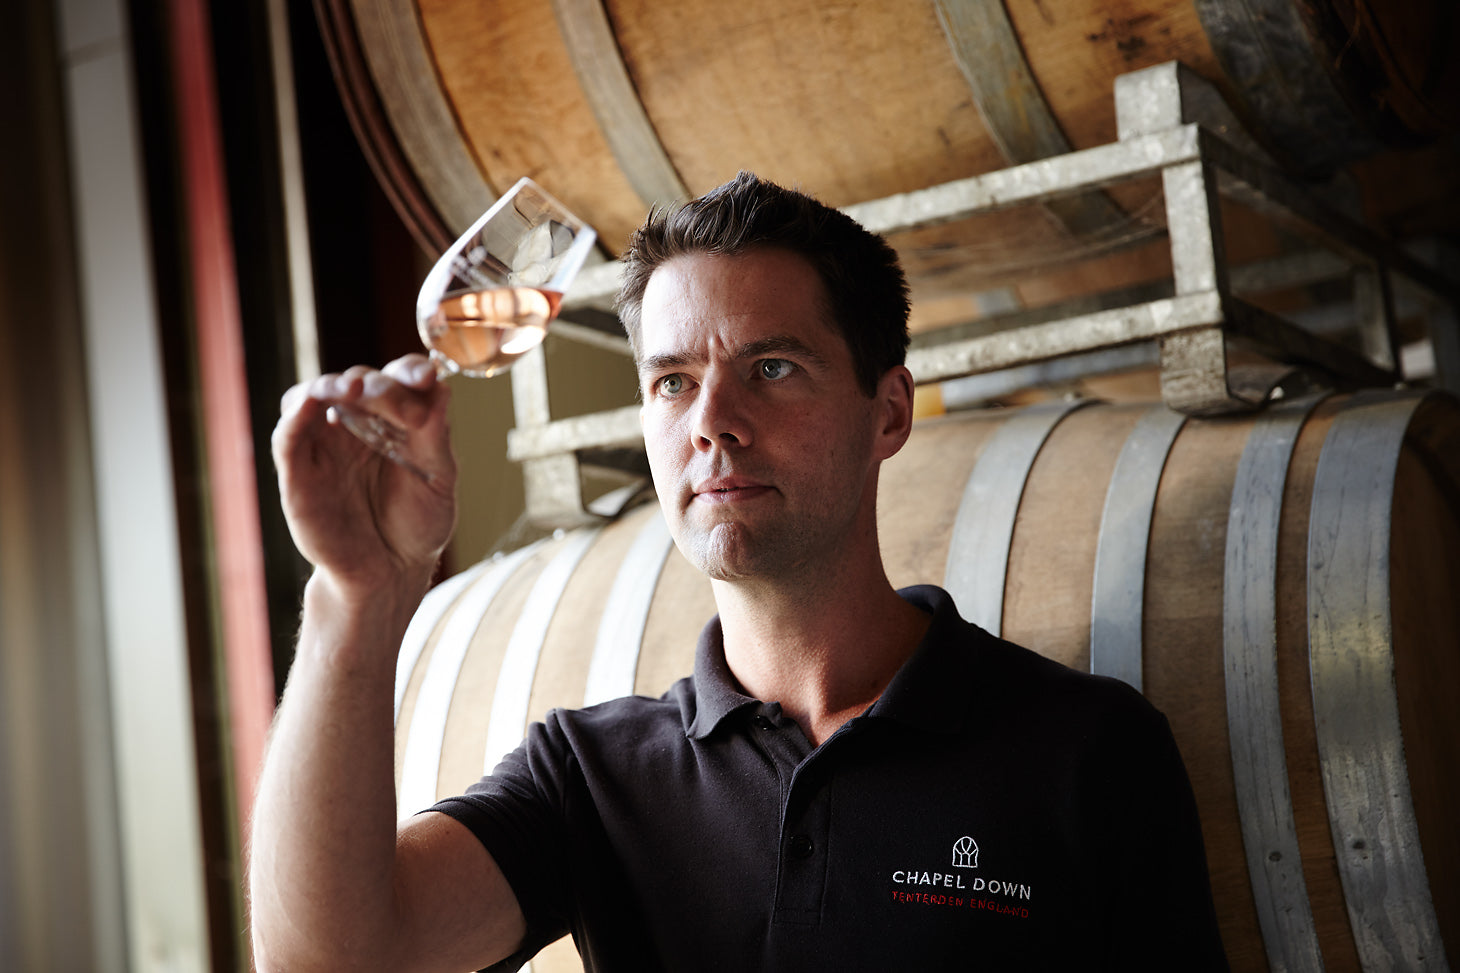 Josh Donaghay-Spire hailed ‘English Winemaker of the Year’